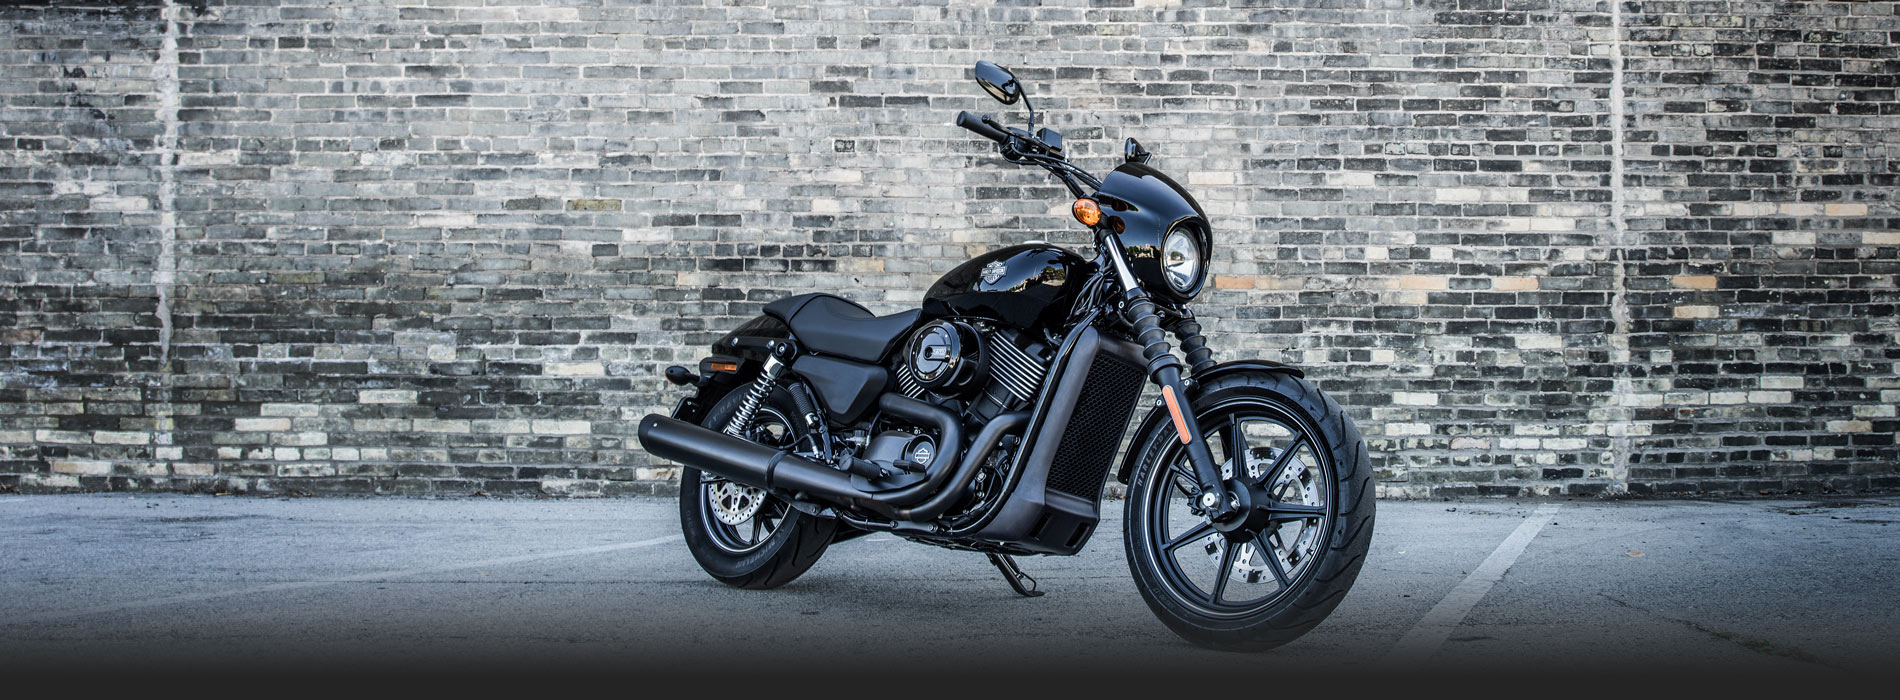 Harley-Davidson Street HD wallpapers, Desktop wallpaper - most viewed